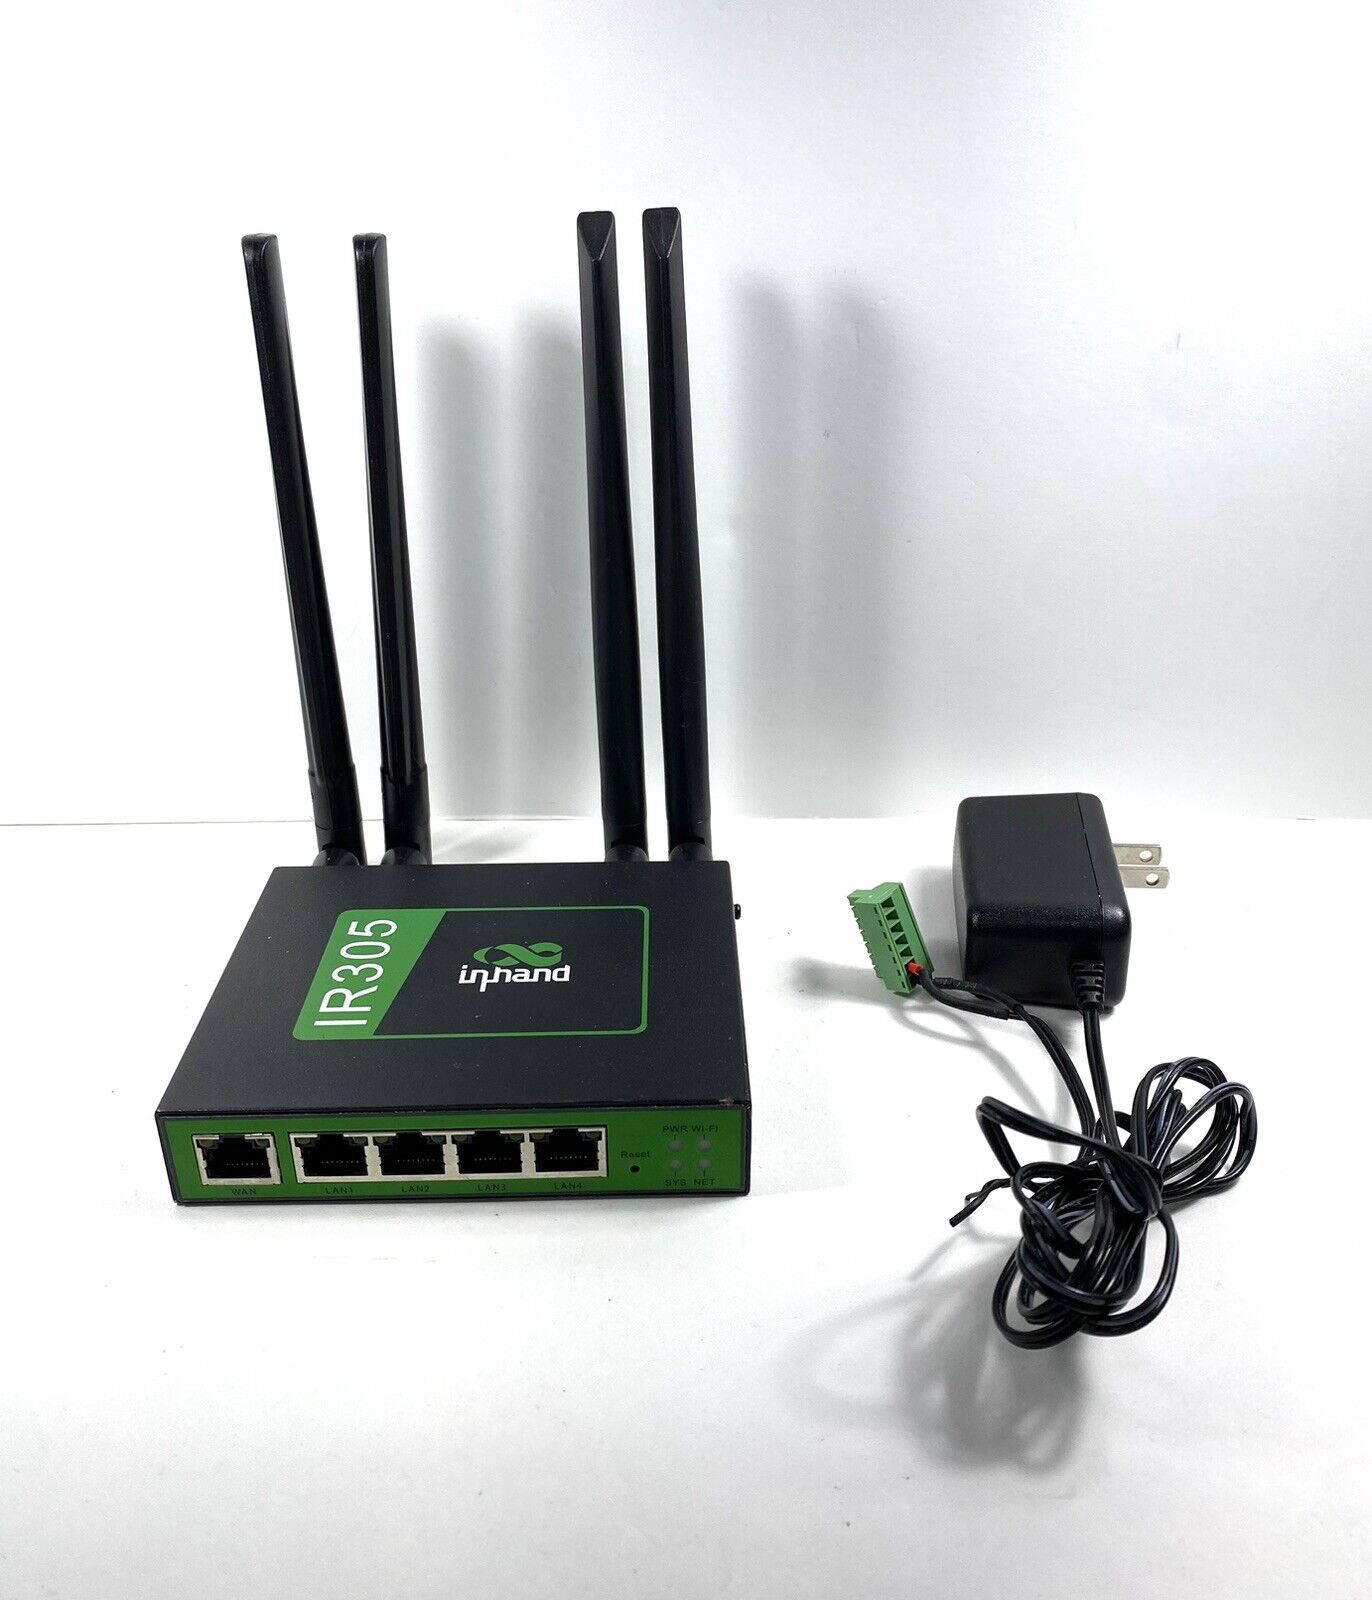 InHand IR305 Industrial Cellular Router 4G LTE 5 Ports *READ DESCRIPTION*